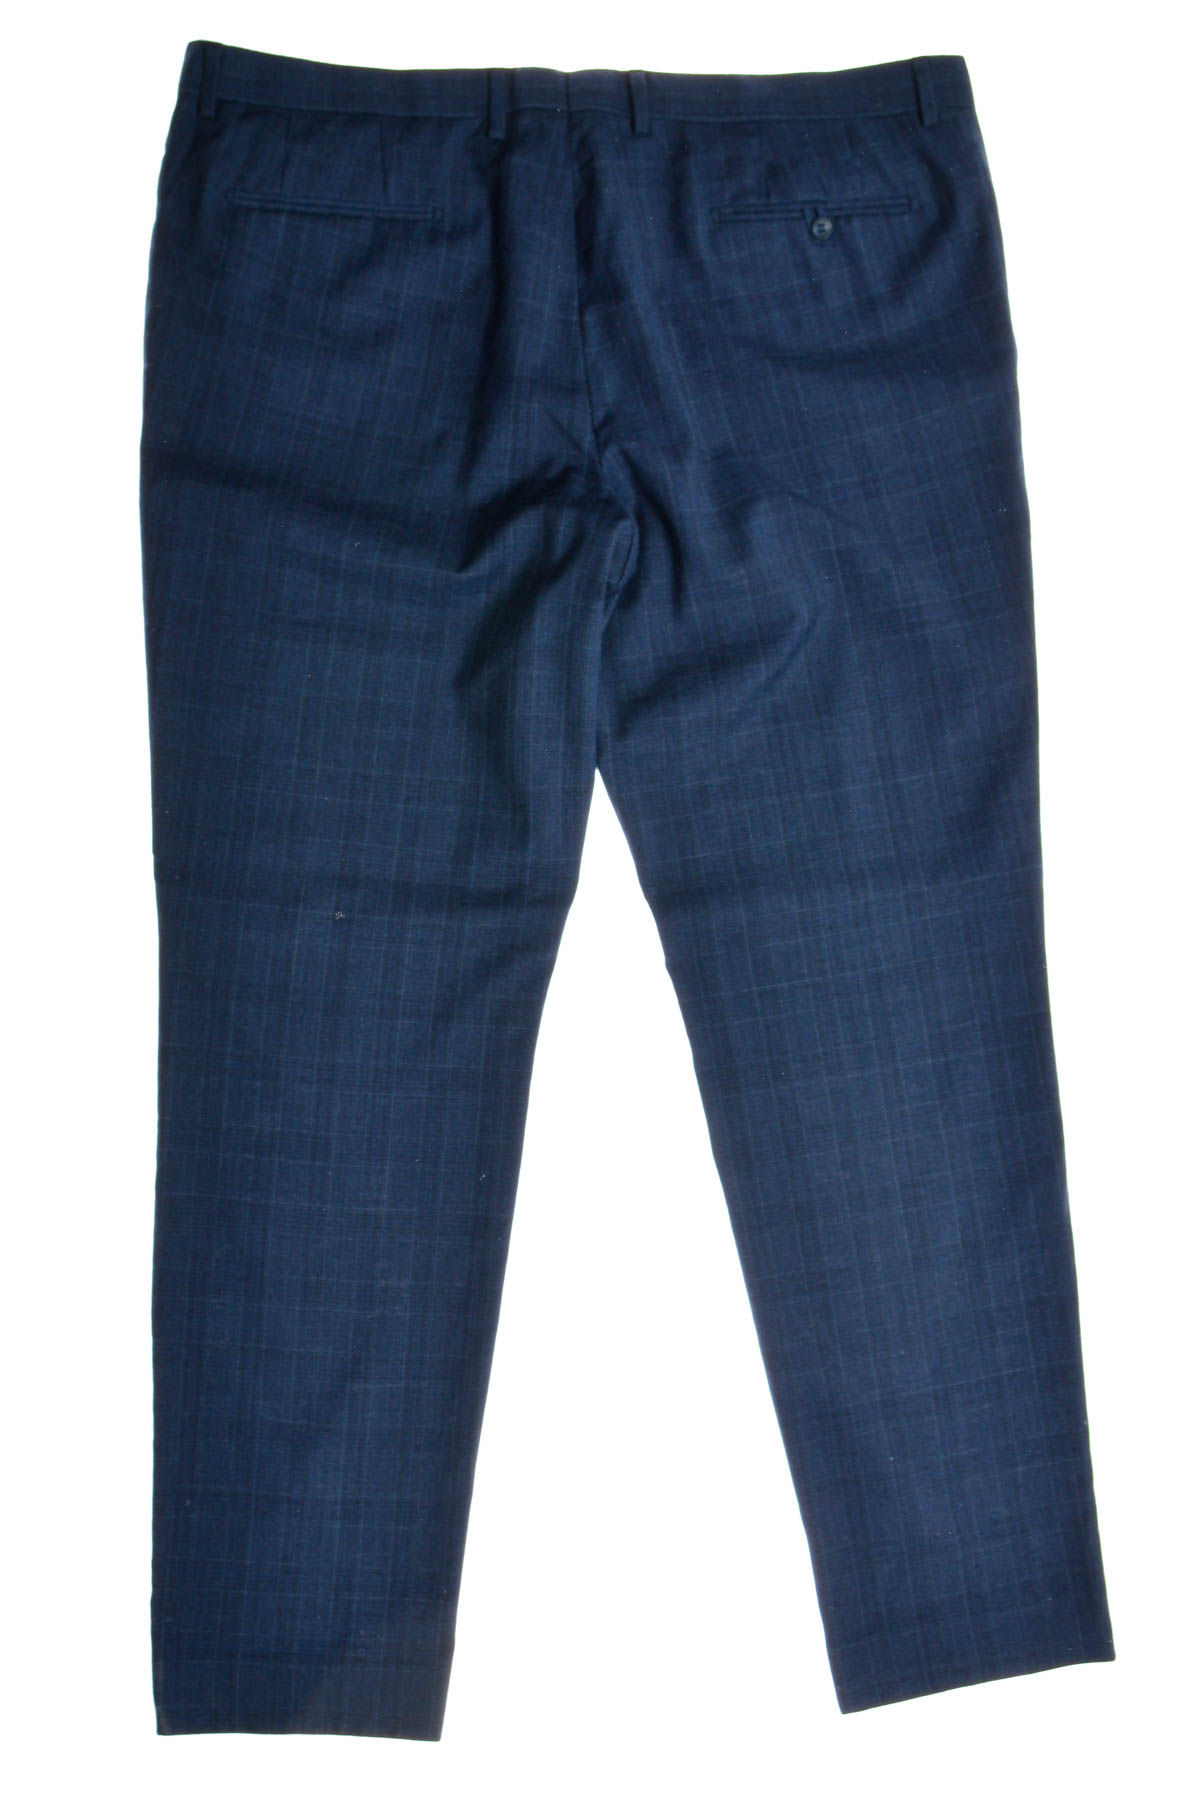 Men's trousers - Bossini - 1